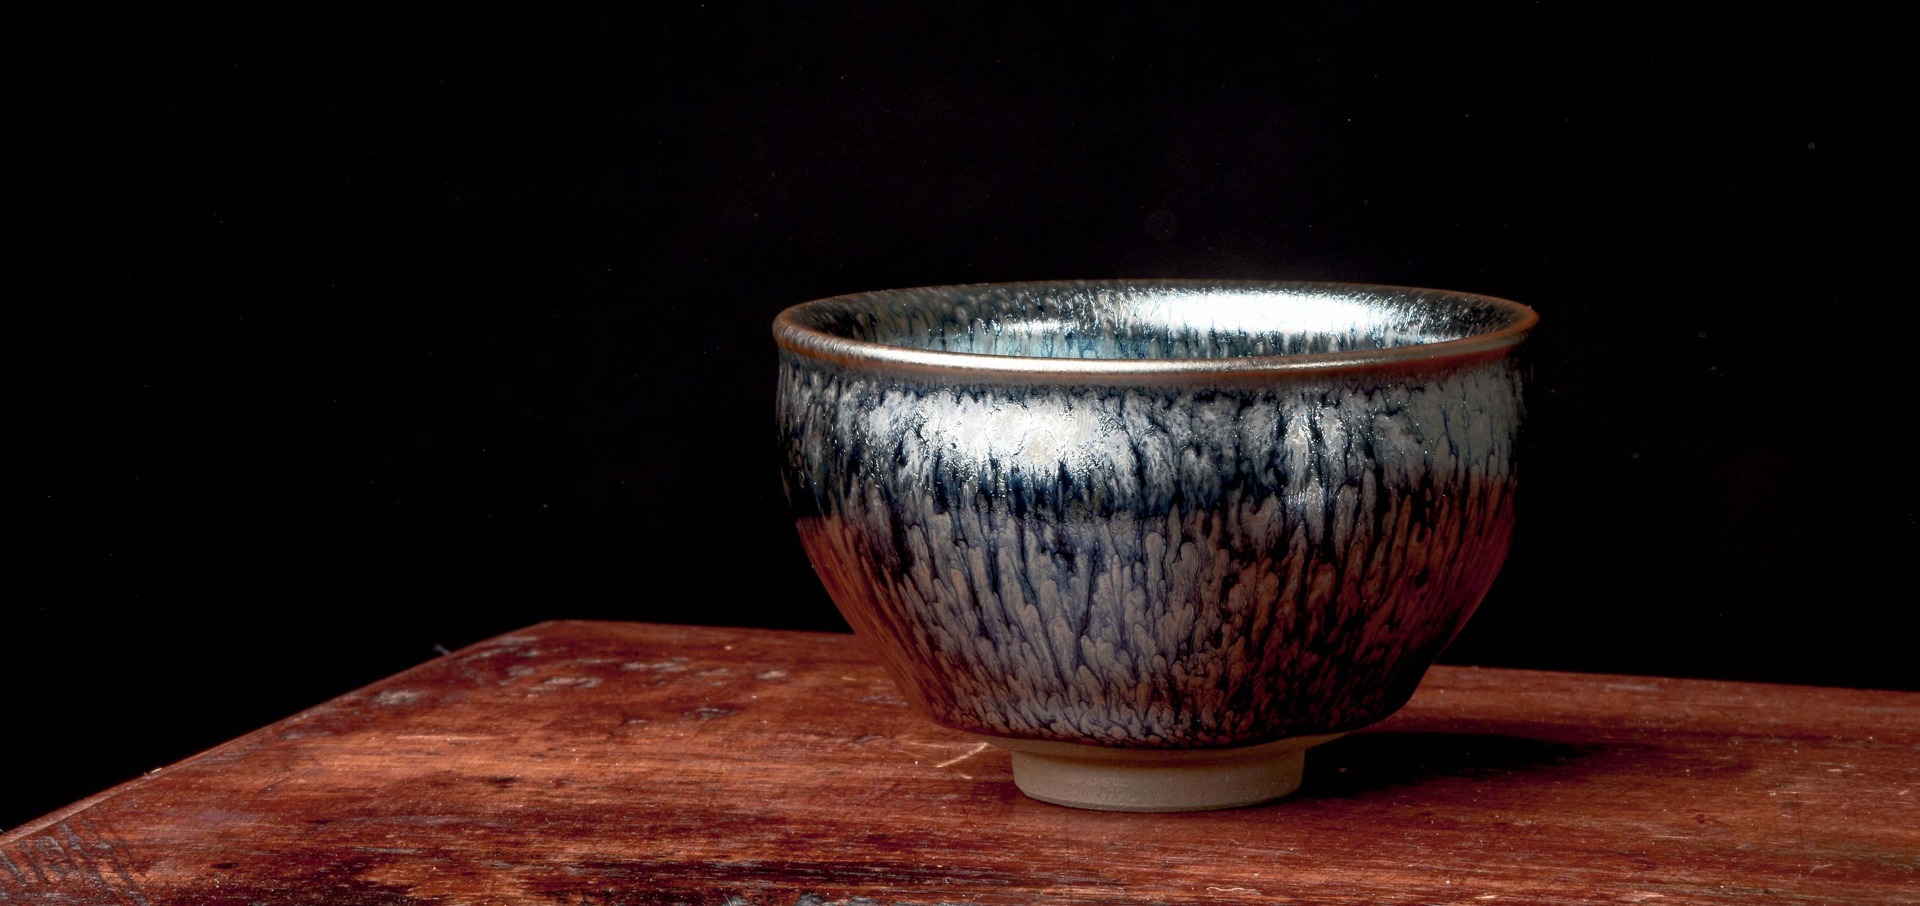 Kankyû-an Whisk – Song Tea & Ceramics